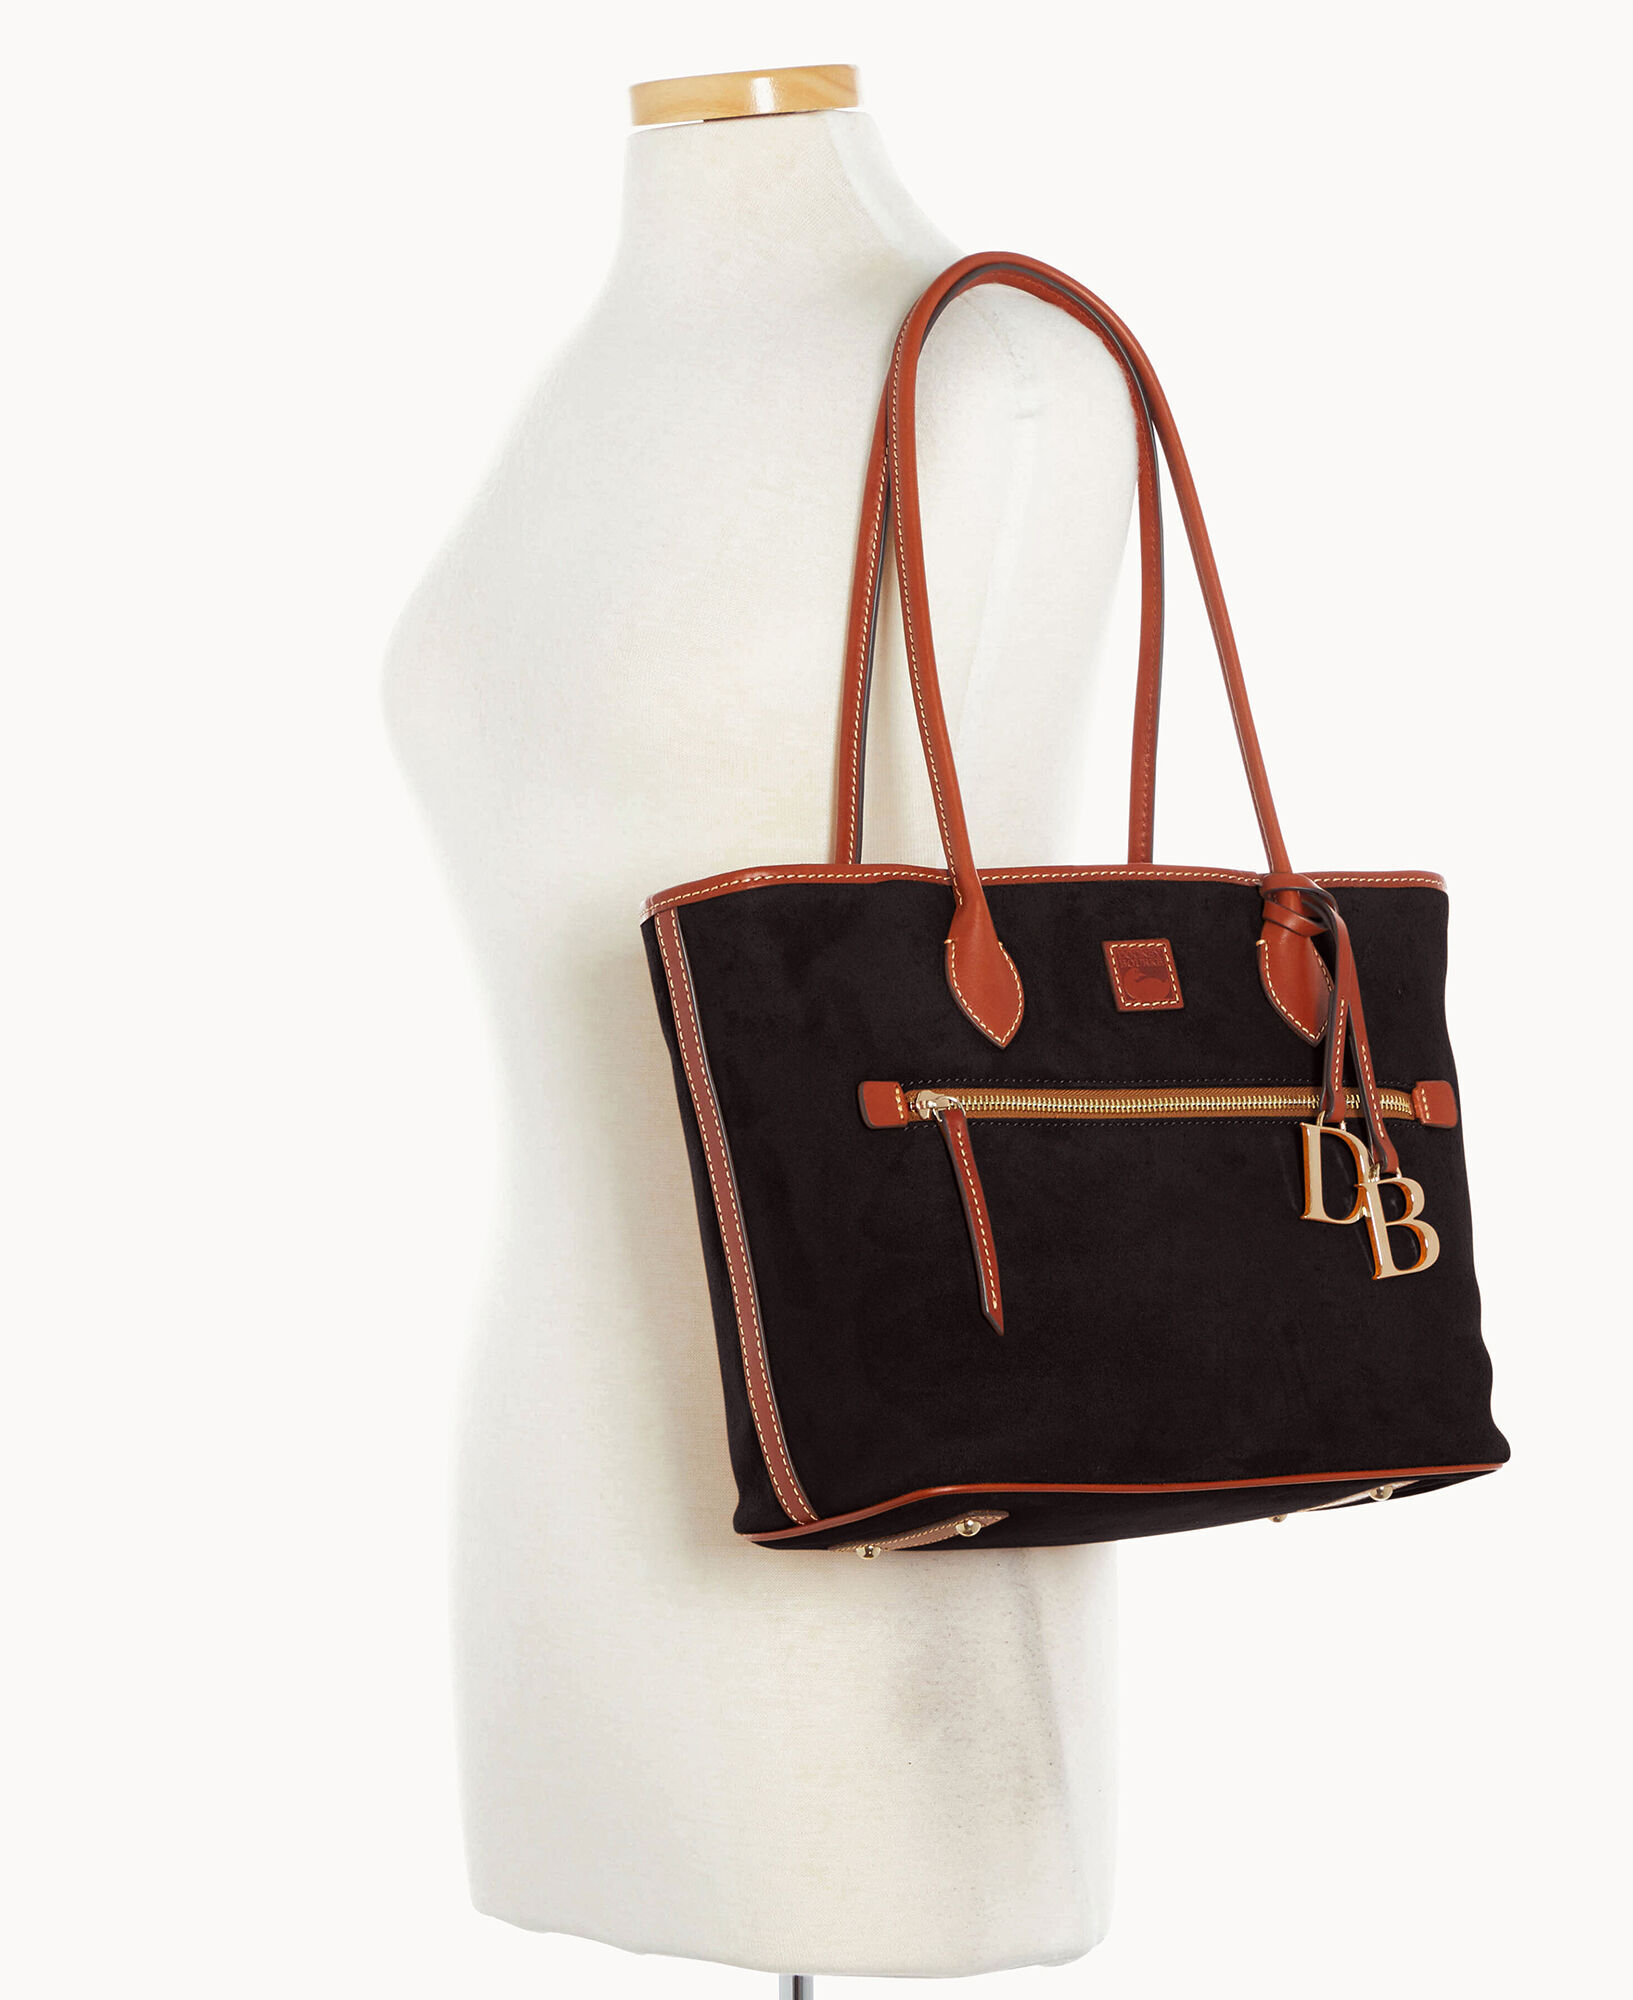 Dooney & Bourke Suede Collection Domed Satchel Bag